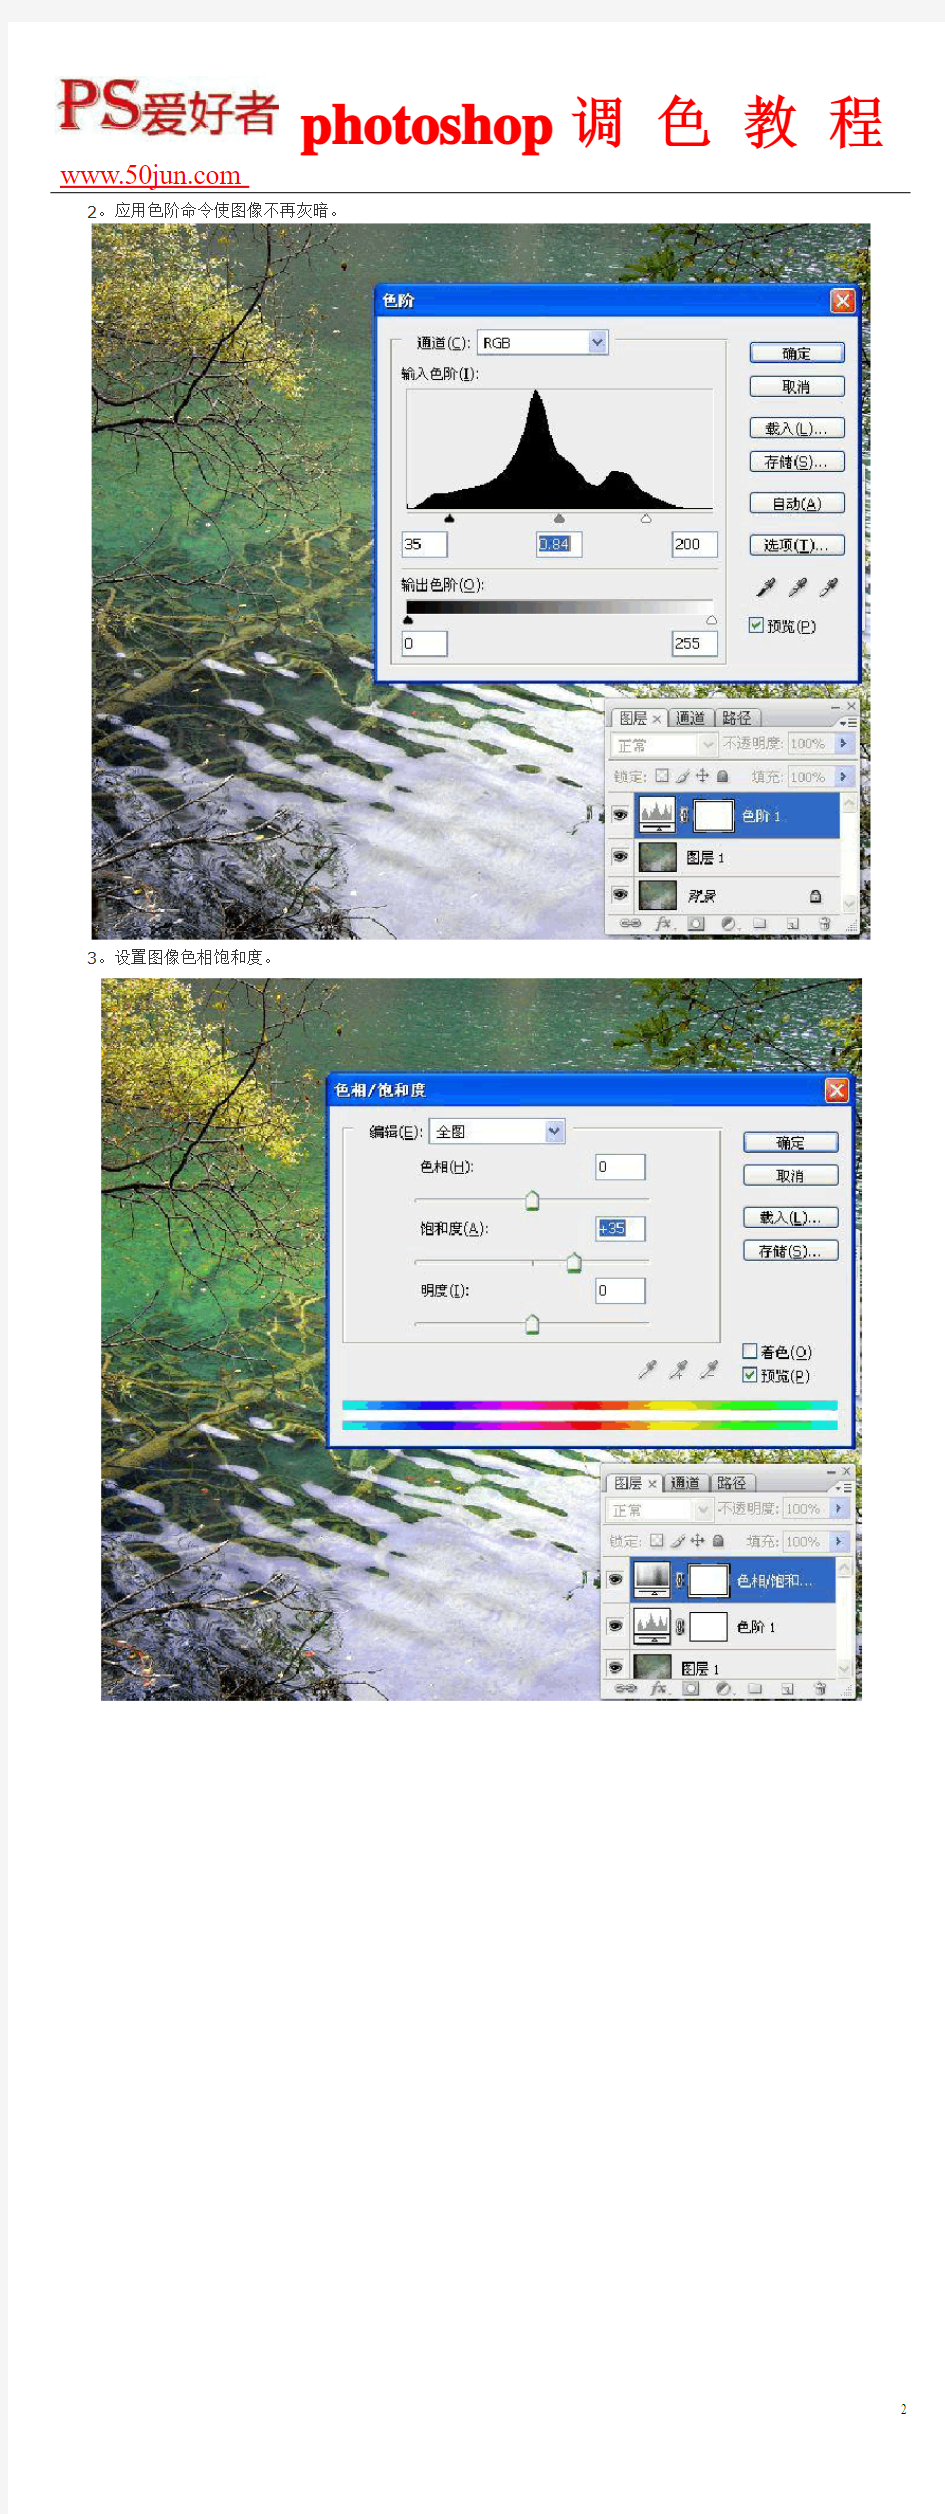 Photoshop调出水面风景照片清澈通透的颜色